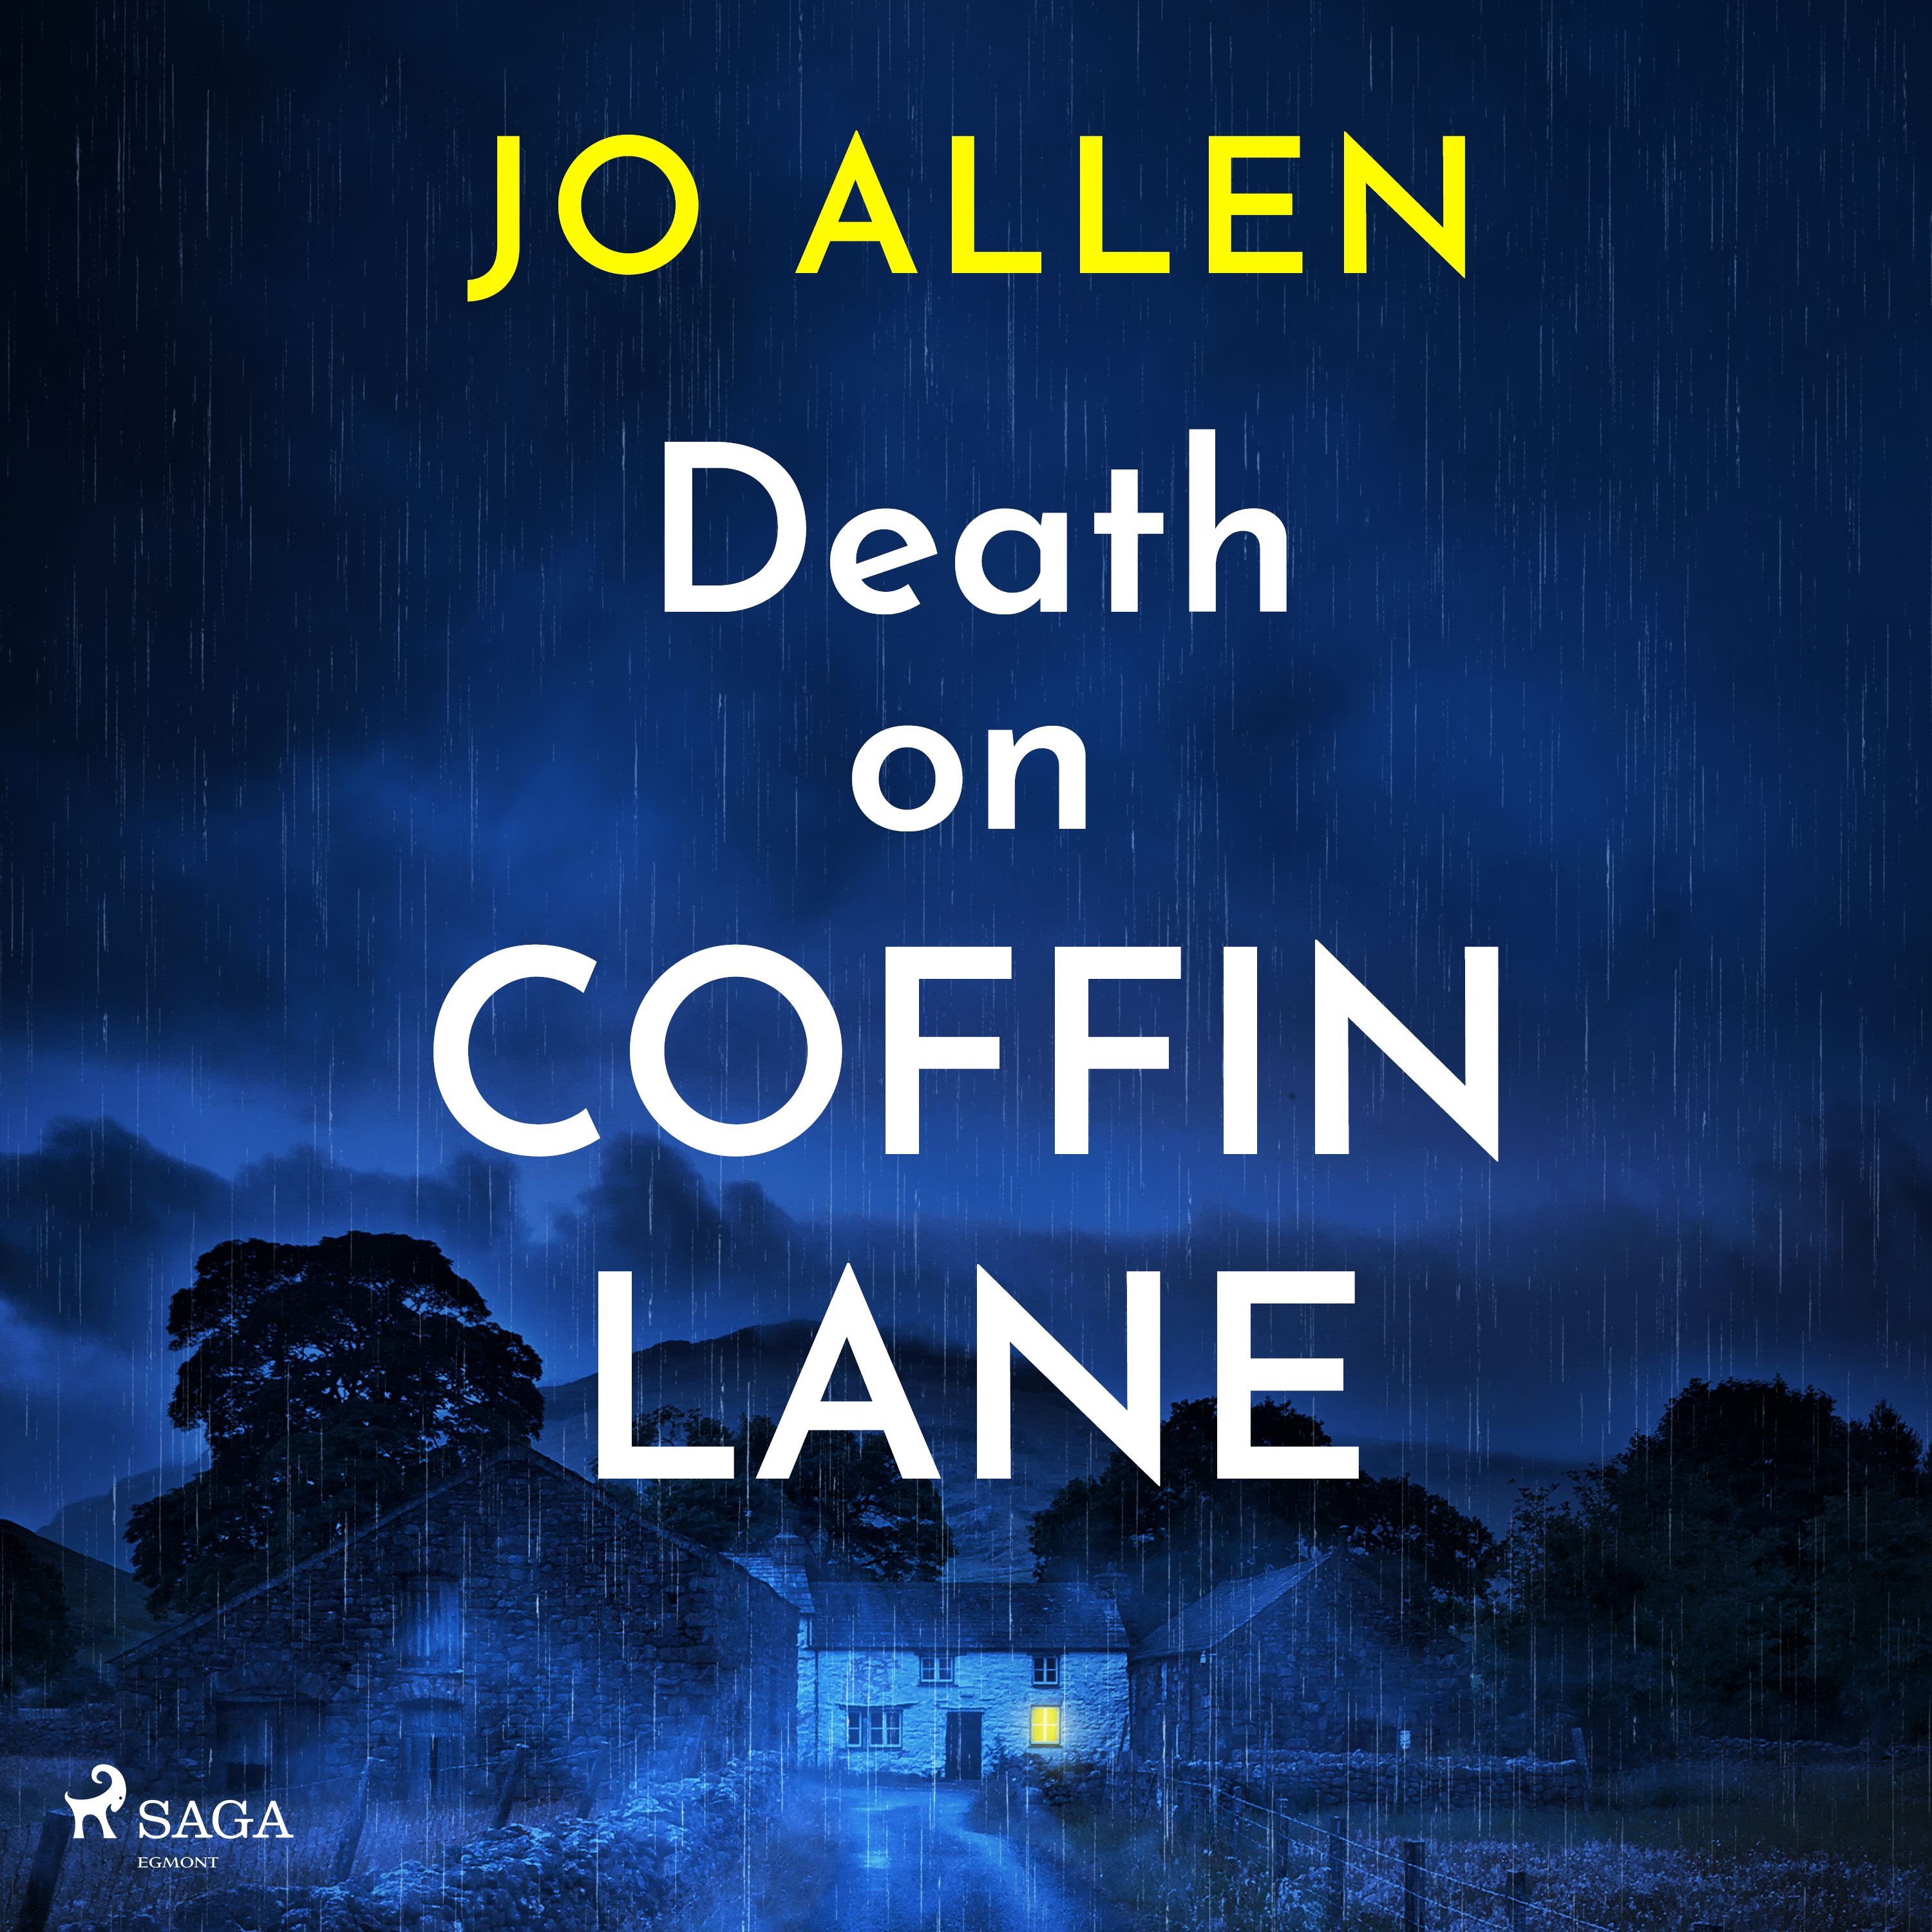 Death on Coffin Lane, ljudbok av Jo Allen